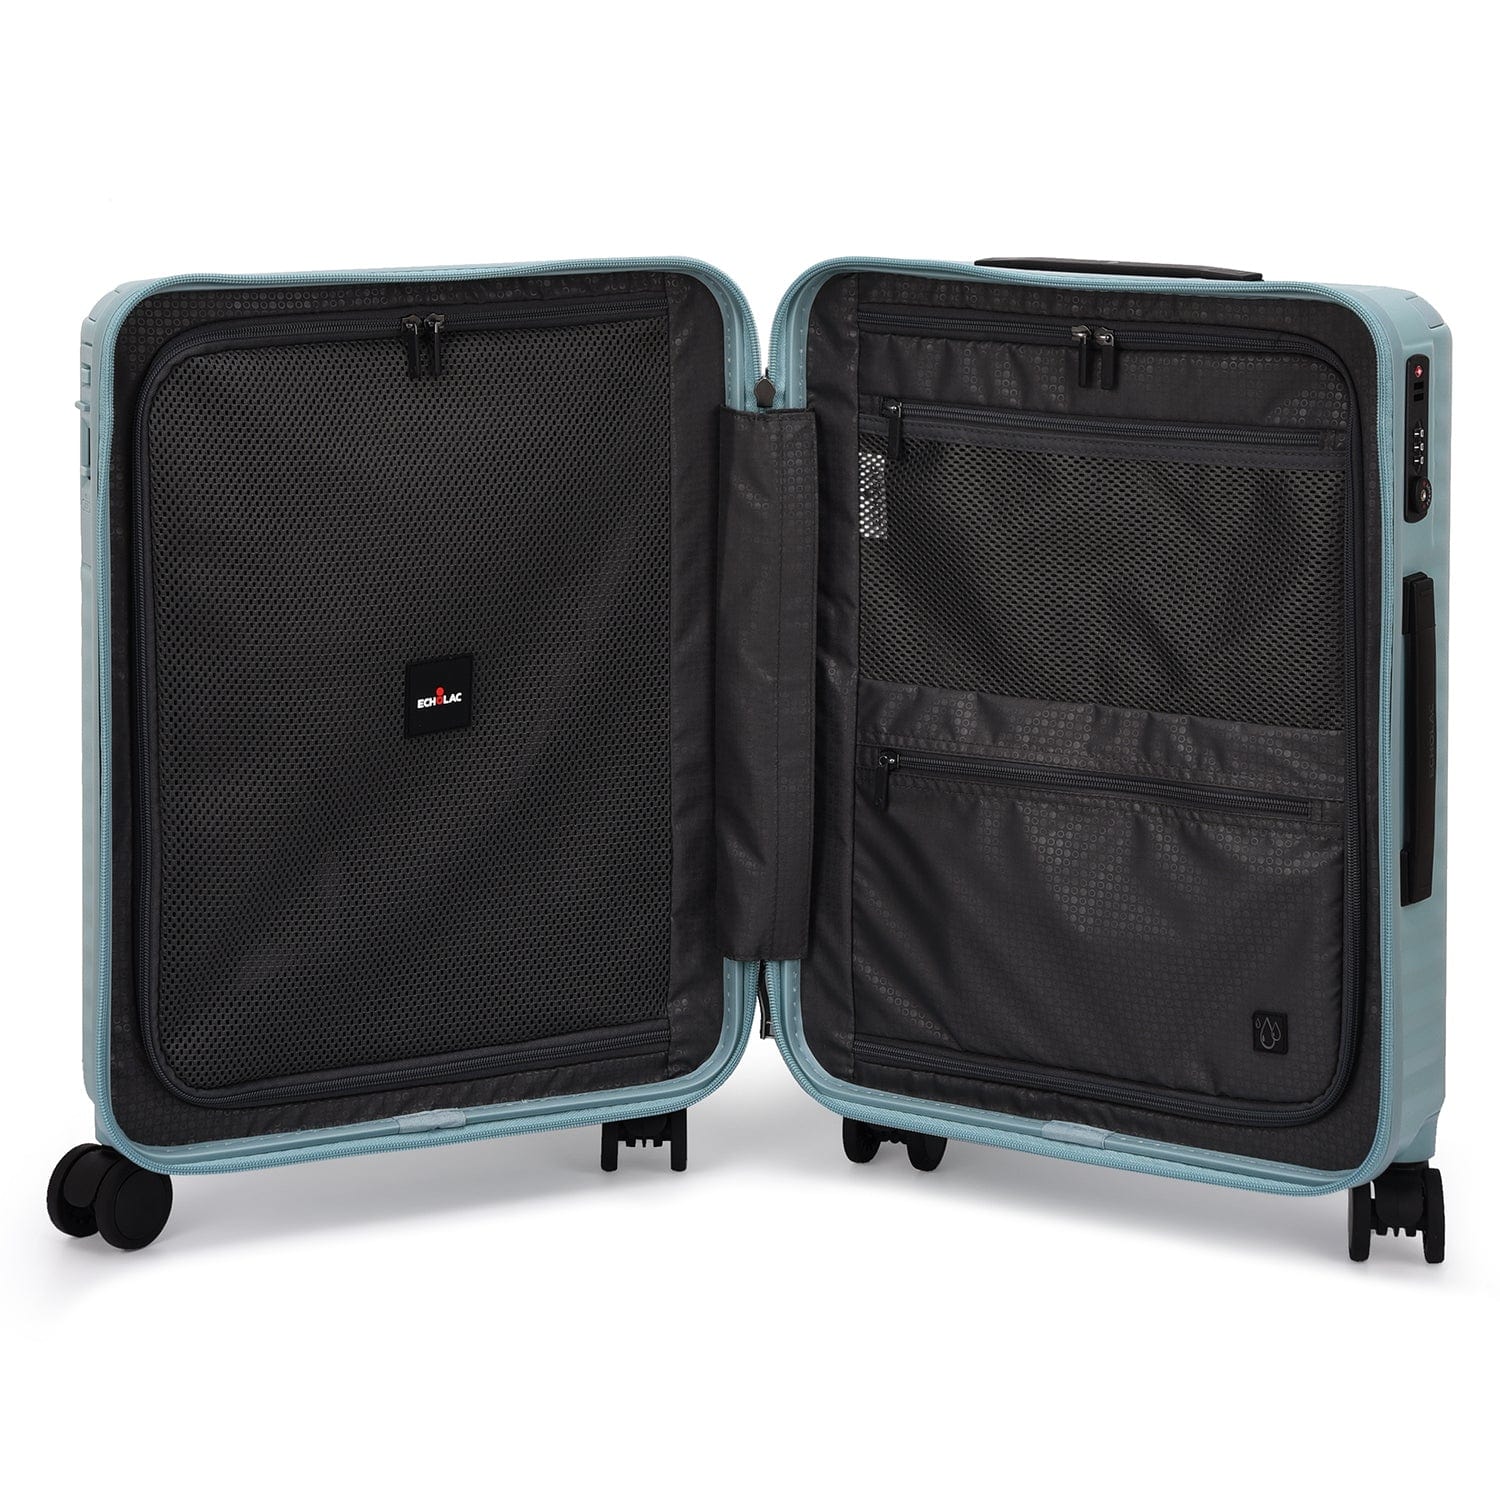 Echolac Celestra 55cm Hardcase Non-Expandable 4 Double Wheel Cabin Luggage Trolley Slate Blue - PC183XA SLATE BLUE 20